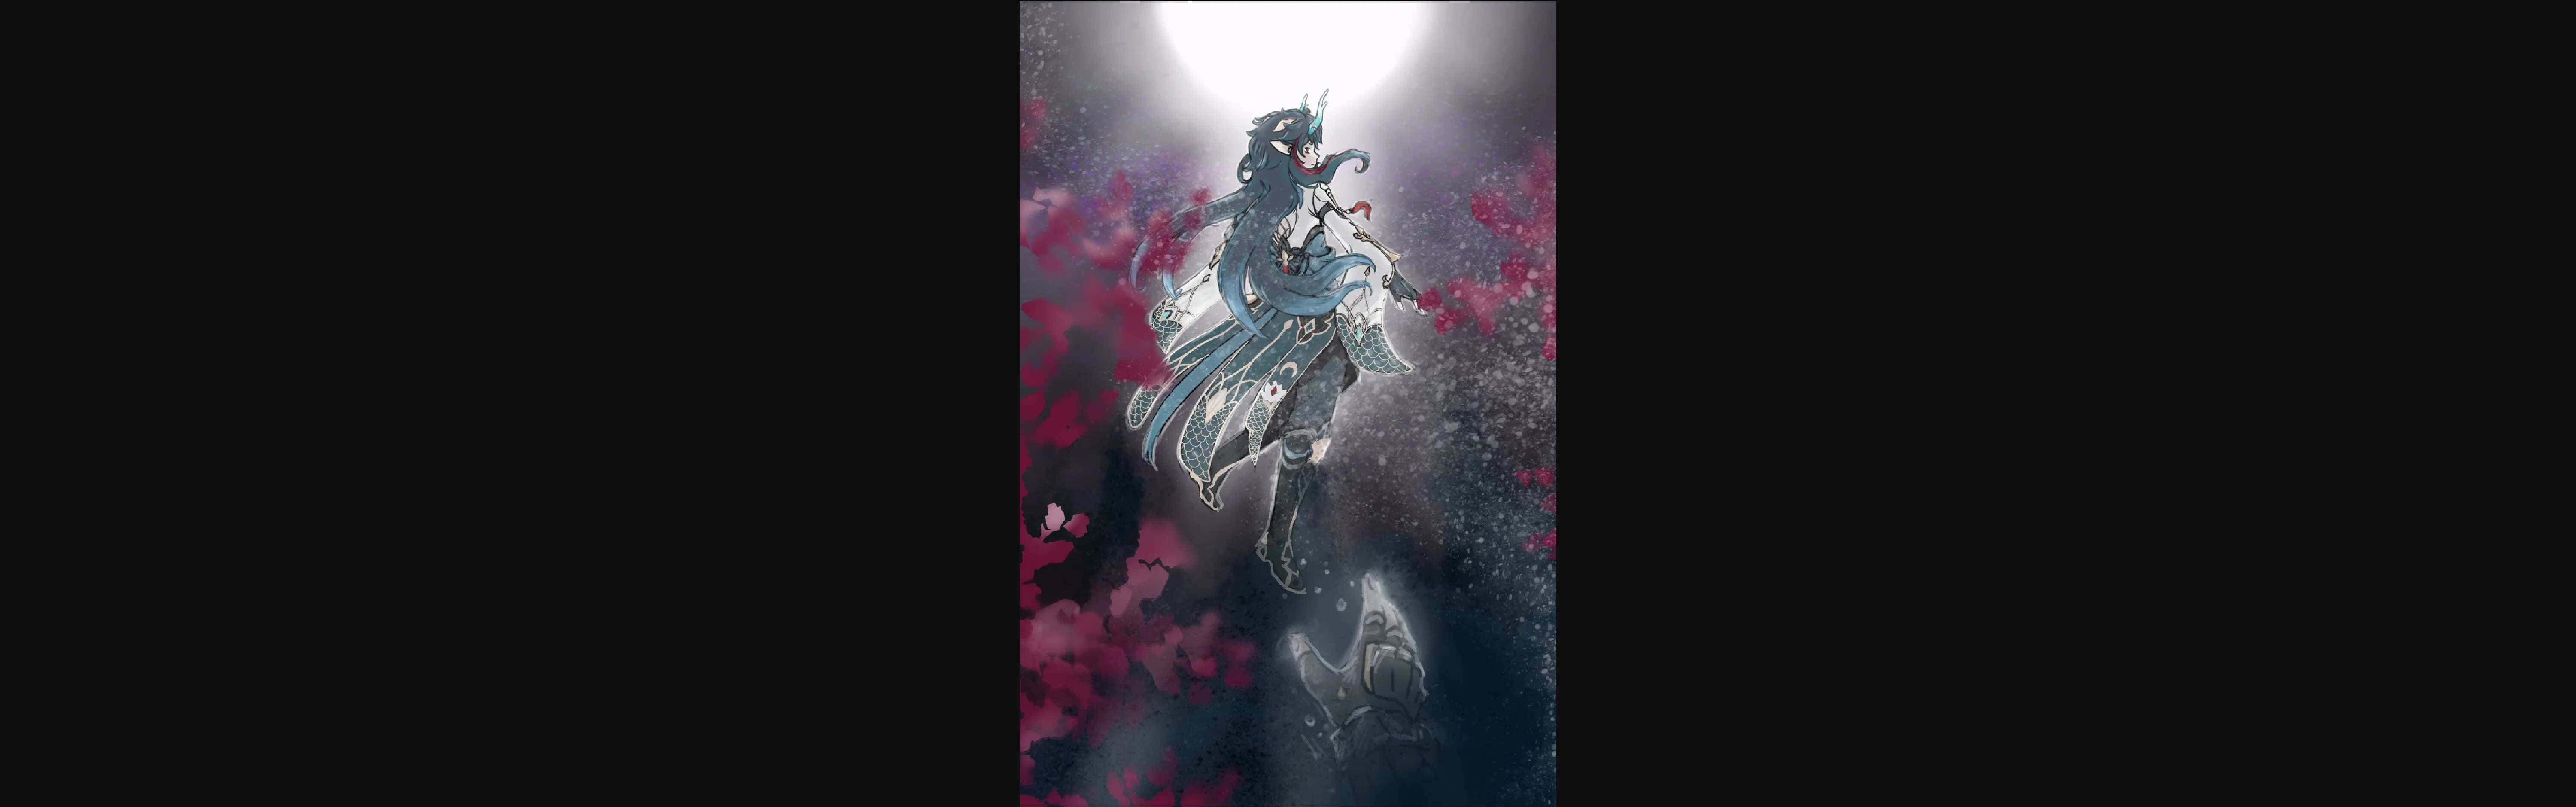 Mystical Warrior Emerging From Mist Wallpaper